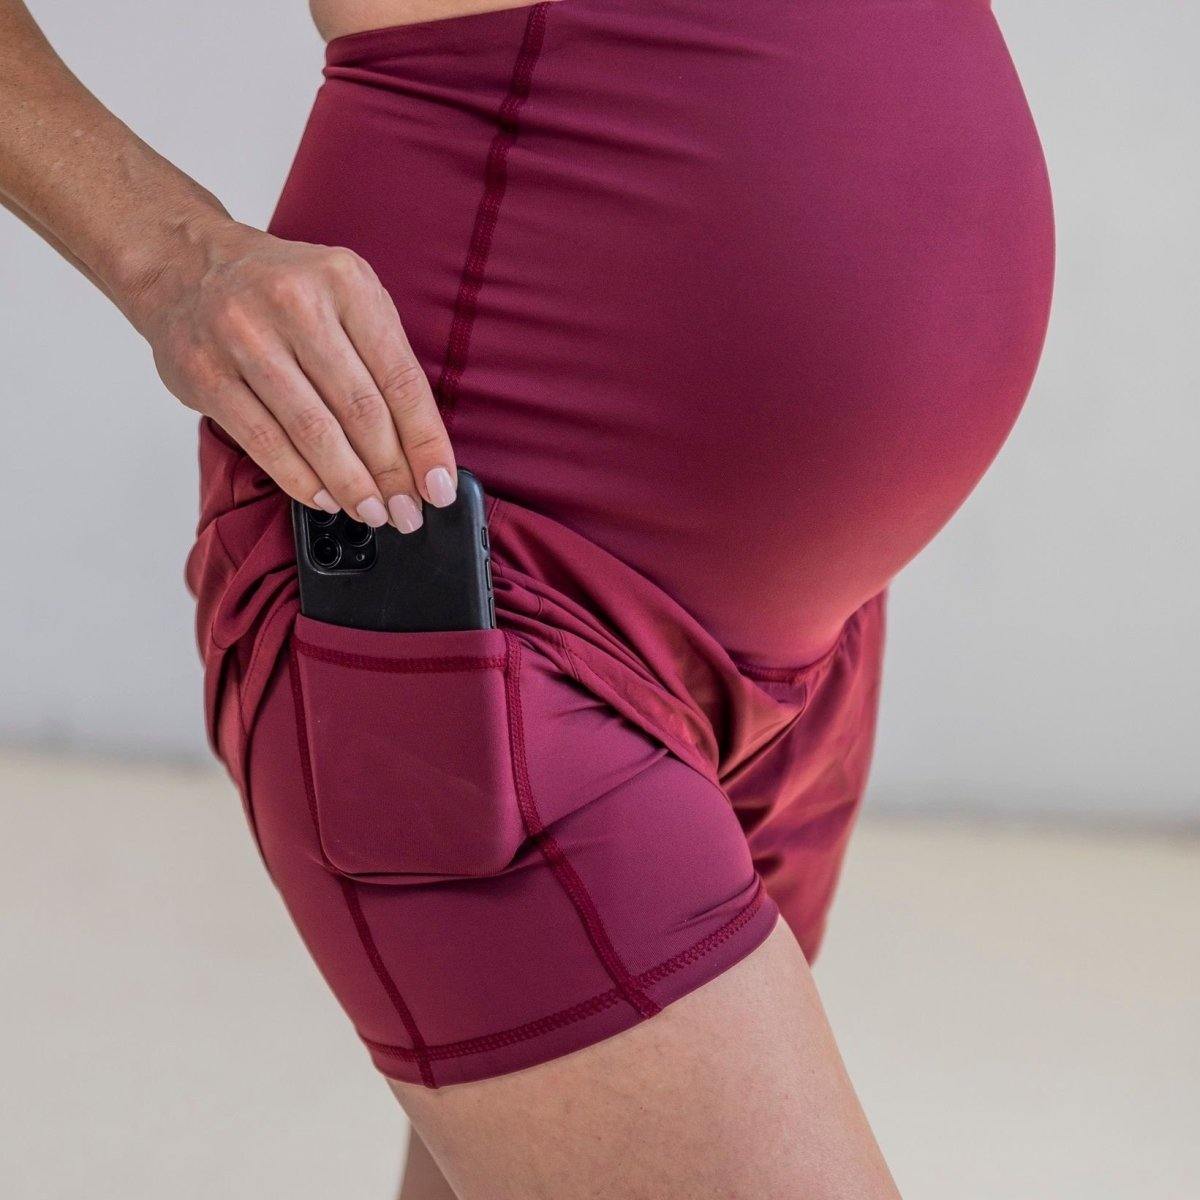 Belly Support Maternity Shorts - Mulberry - Senita Athletics